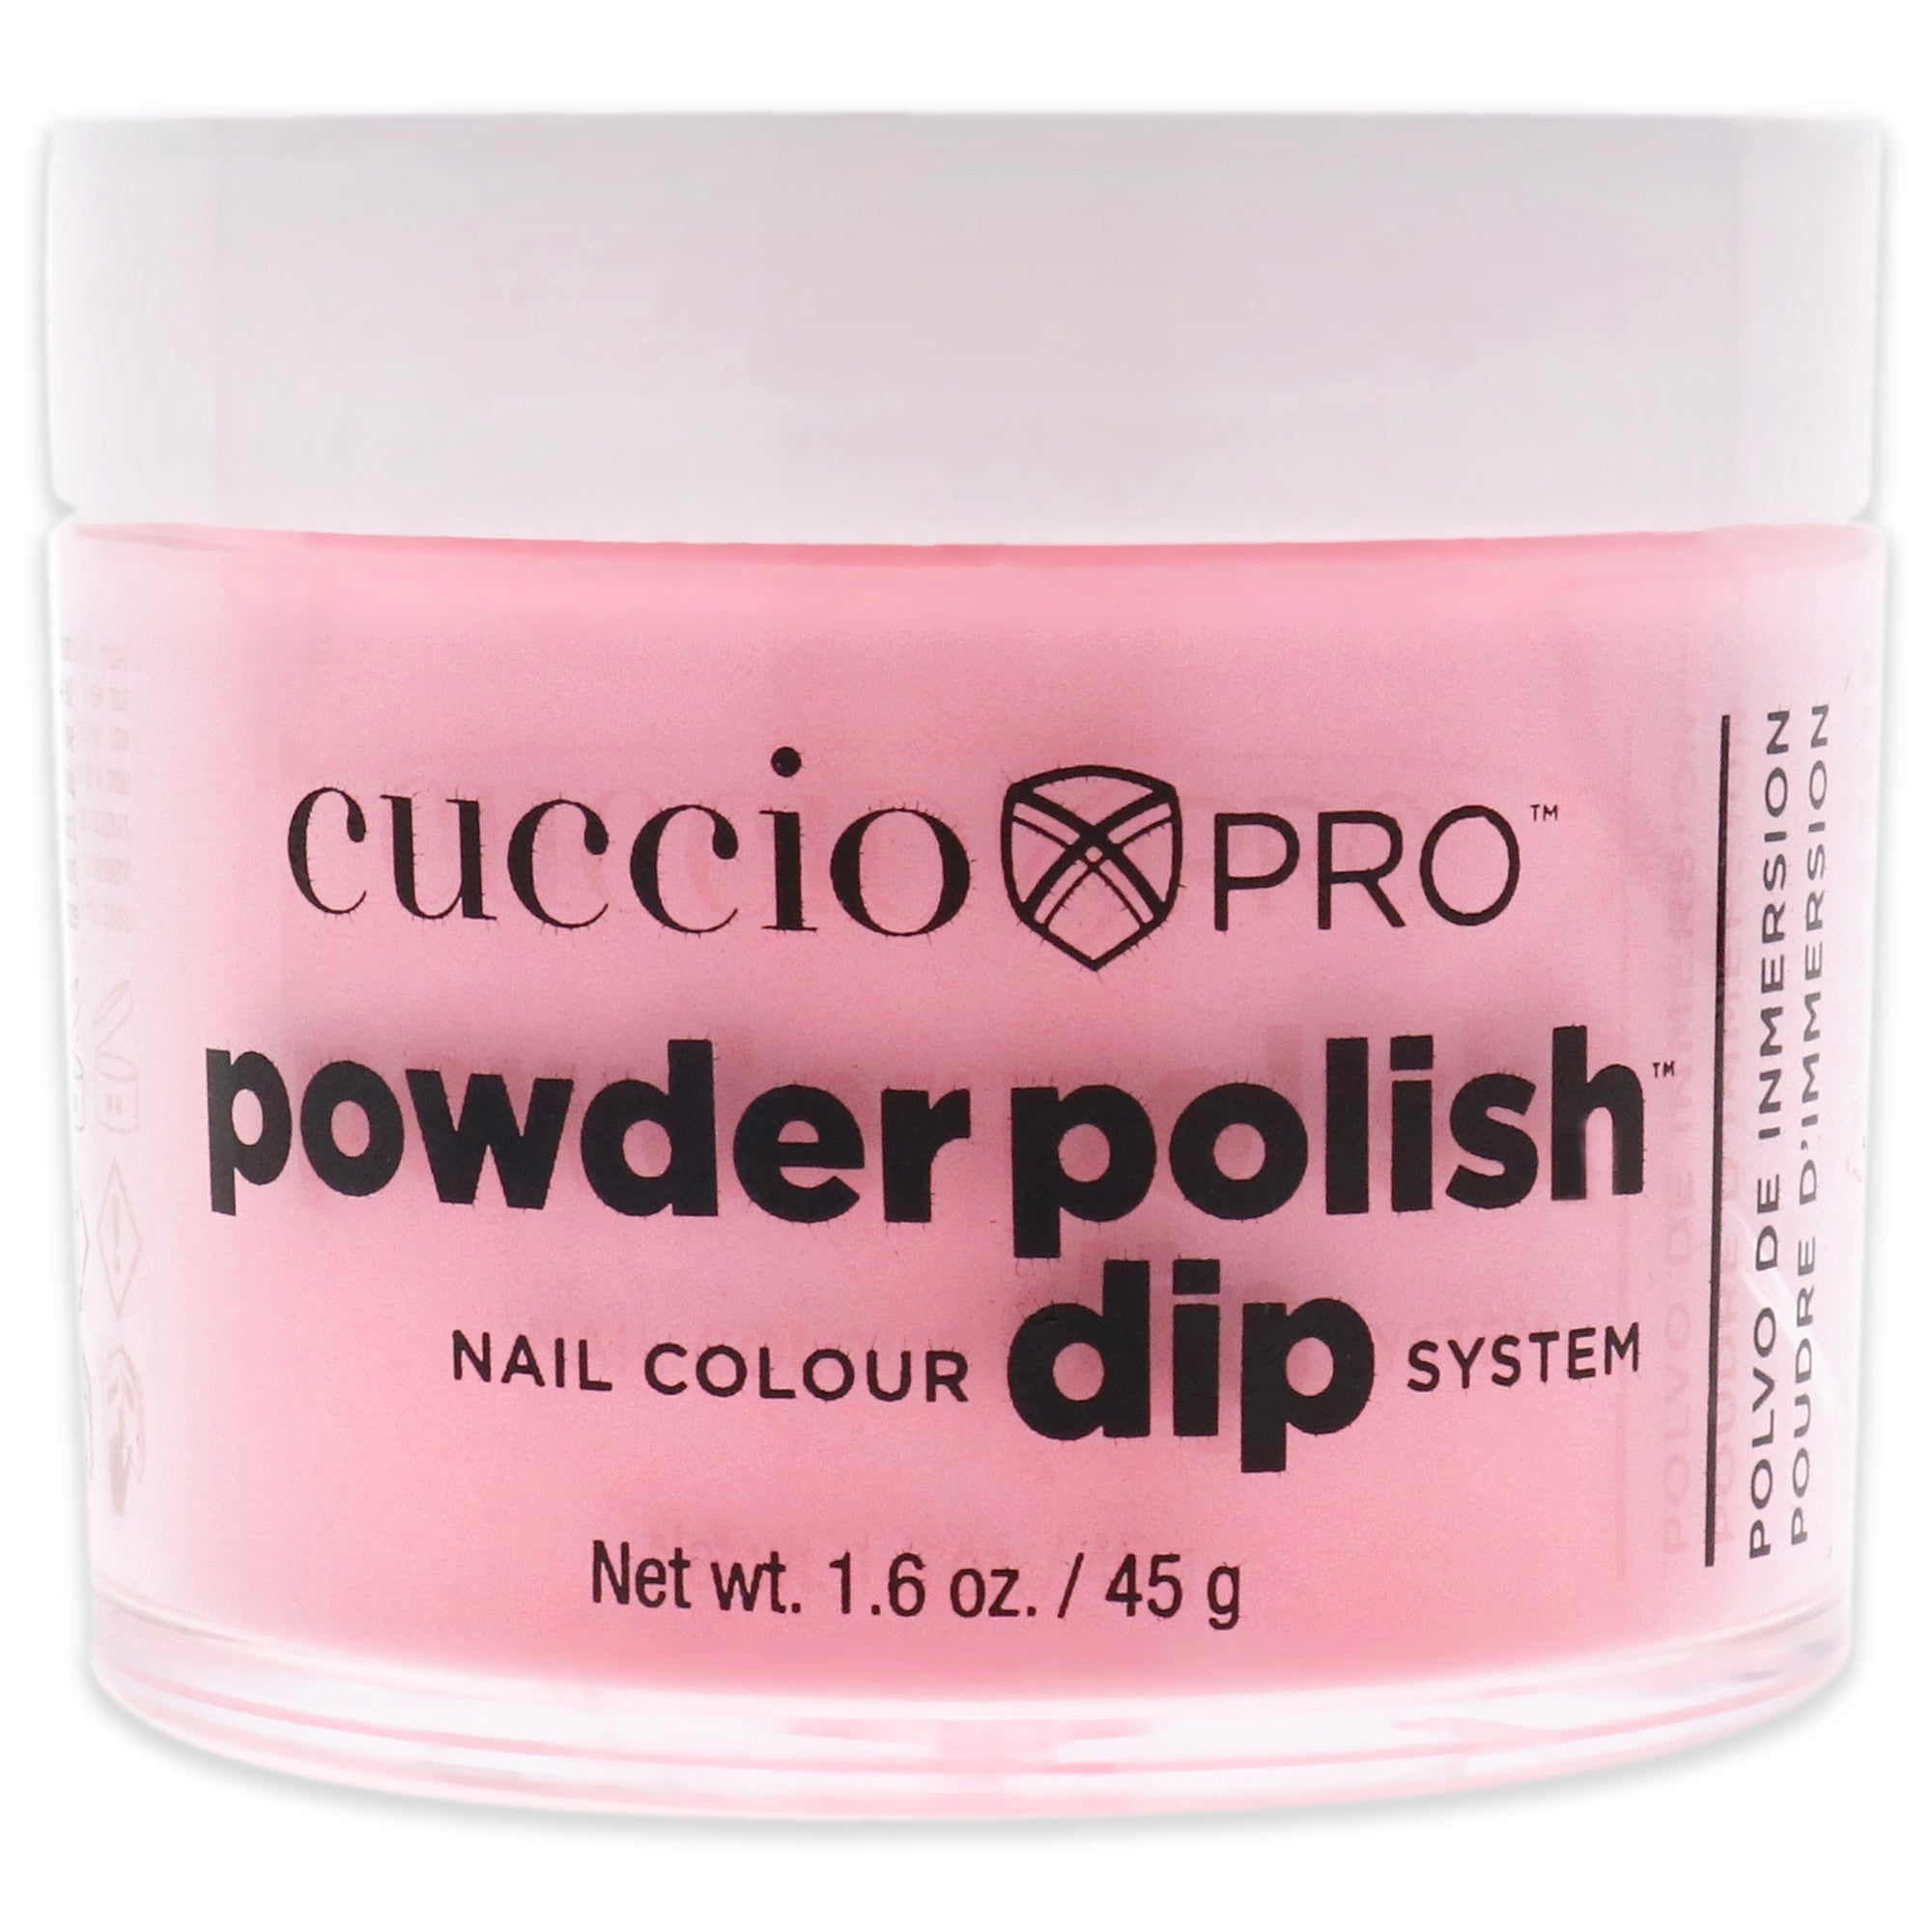 Pro Powder Polish Nail Colour Dip System - Once In A Lifetime by Cuccio Colour for Women - 1.6 oz Nail Powder